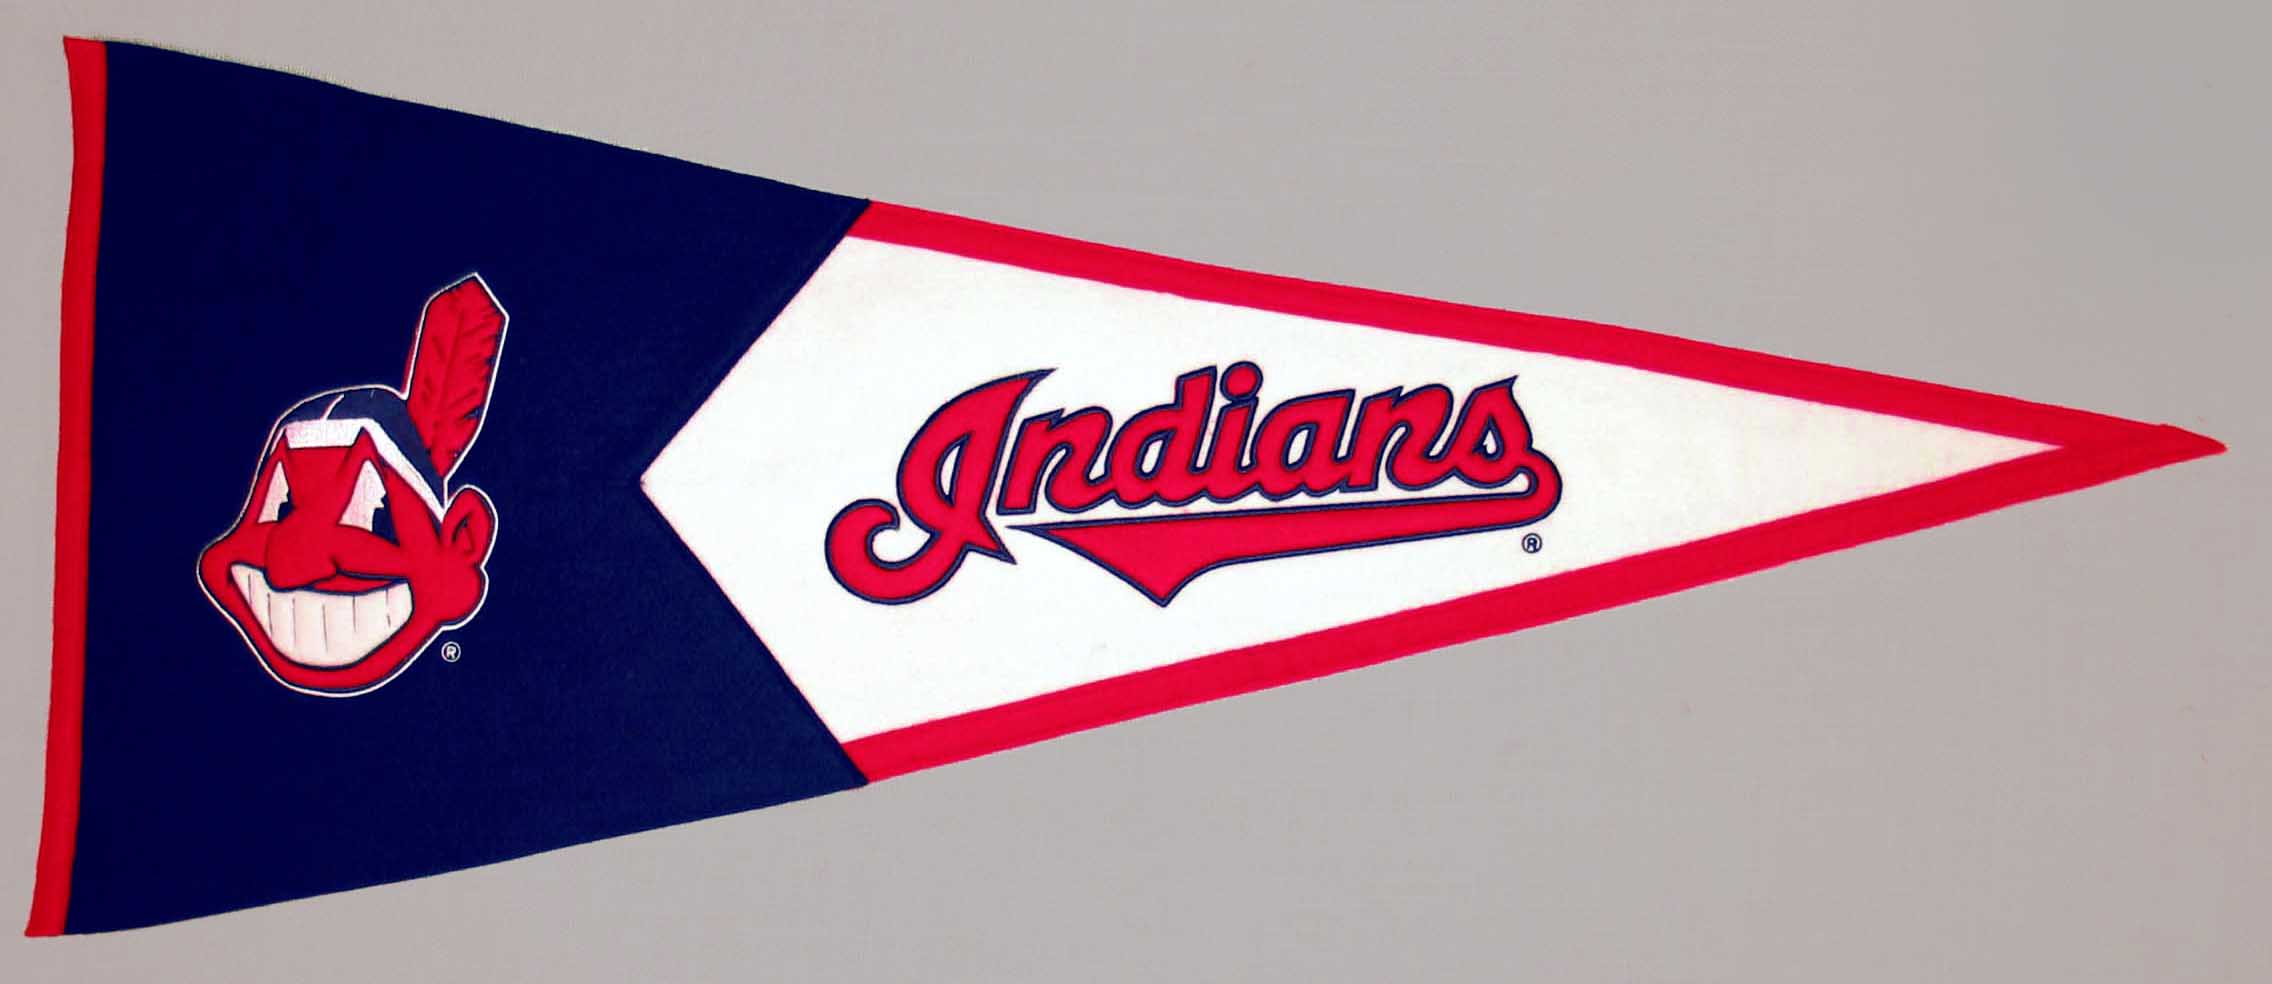 Cleveland Indians Mlb Baseball 46 Wallpapers Hd Desktop And Mobile Backgrounds